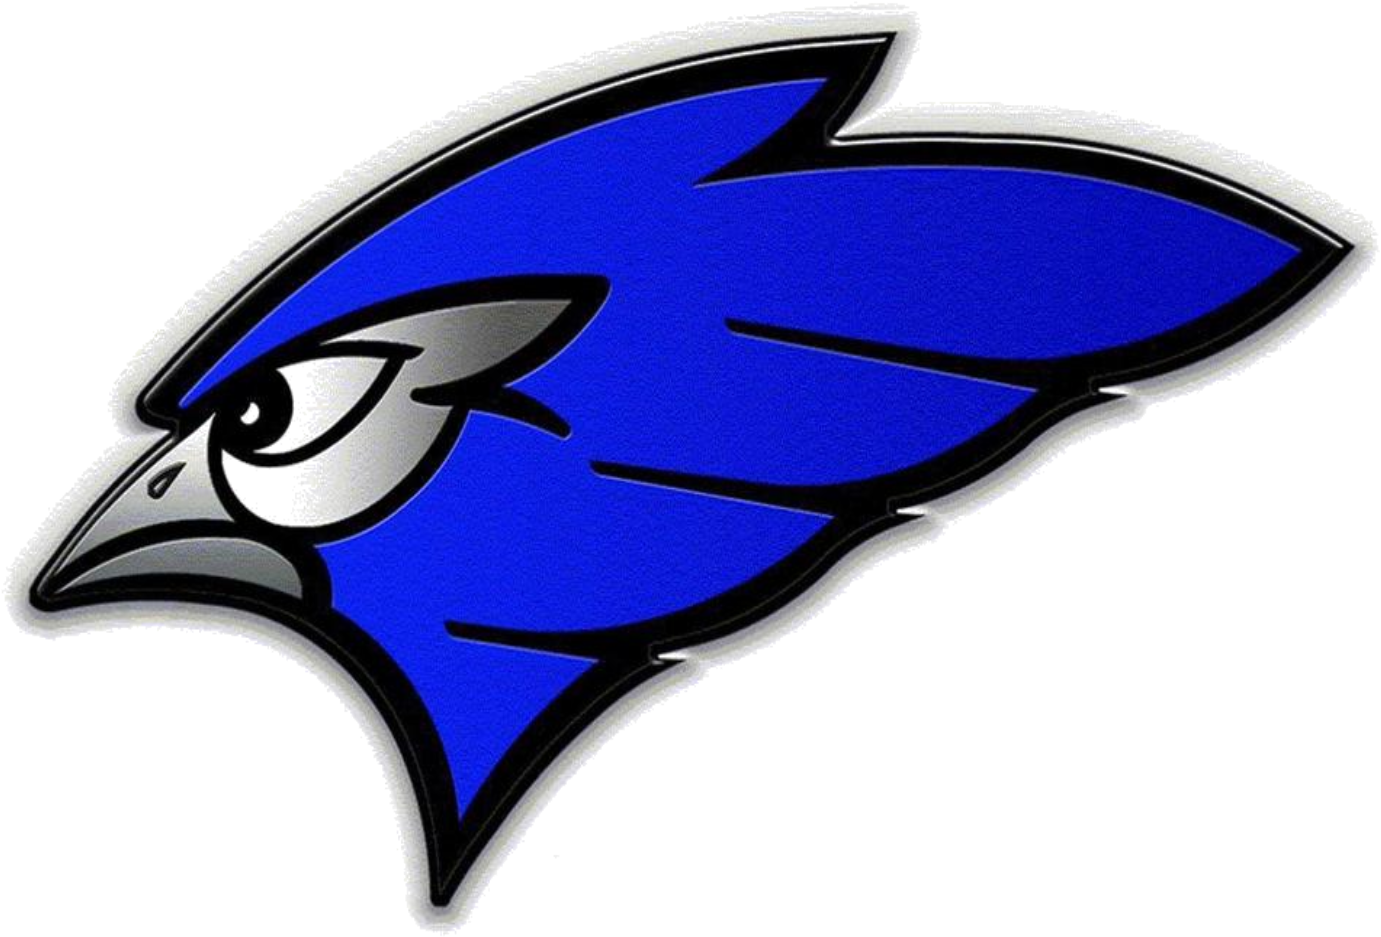 Blue Jay Mascot Image - North Judson San Pierre High School (1453x1018)